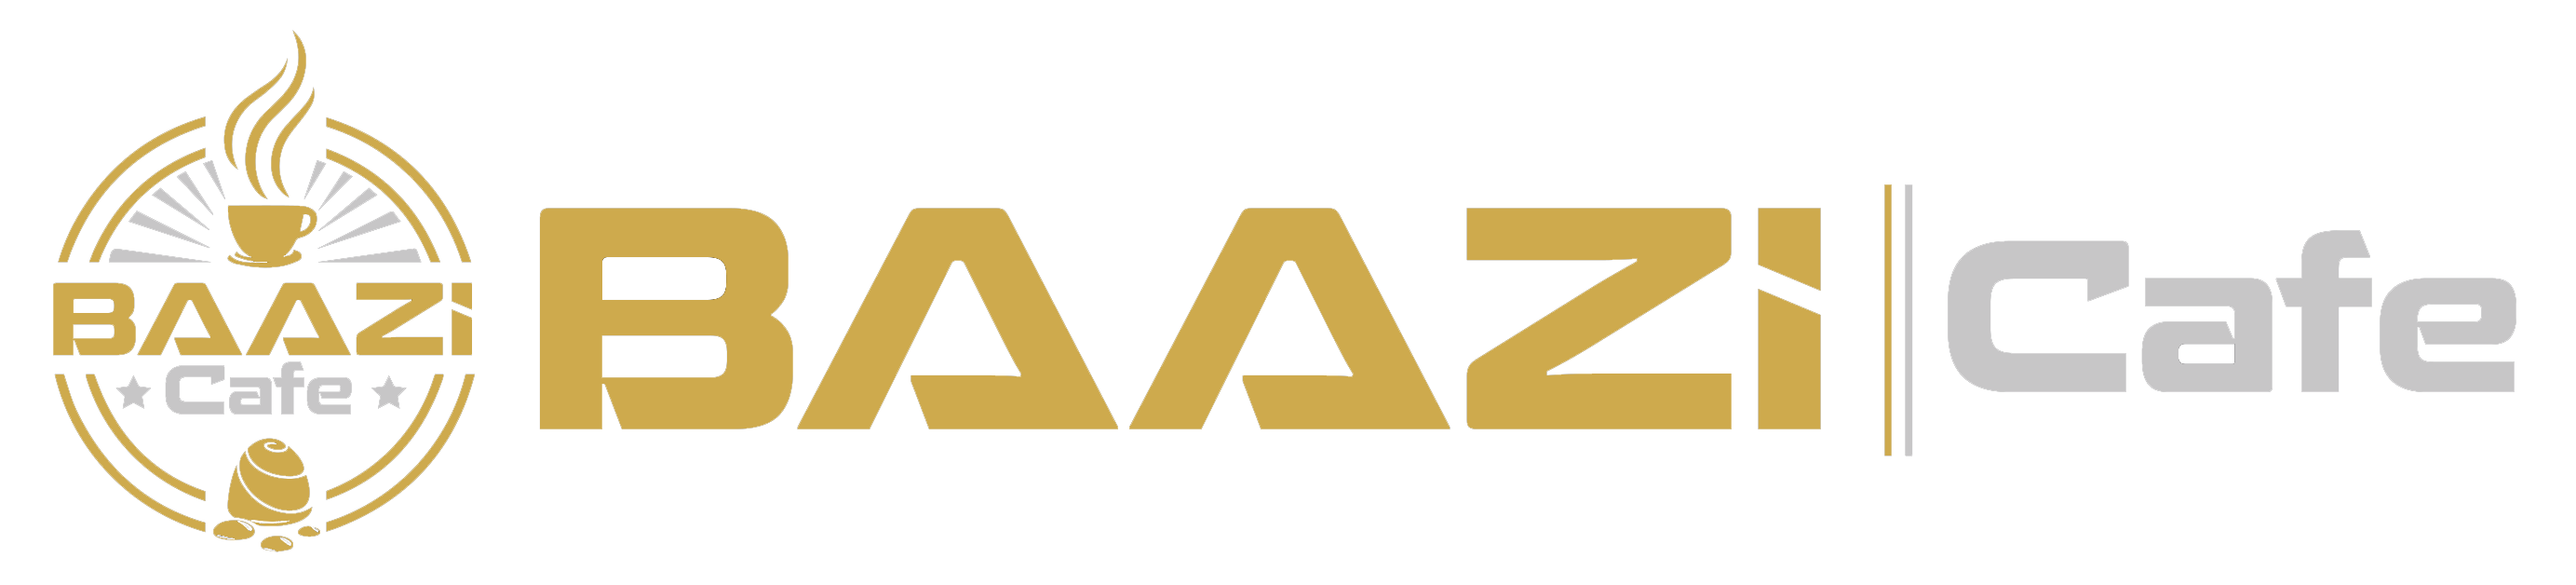 Baazi Cafe logo